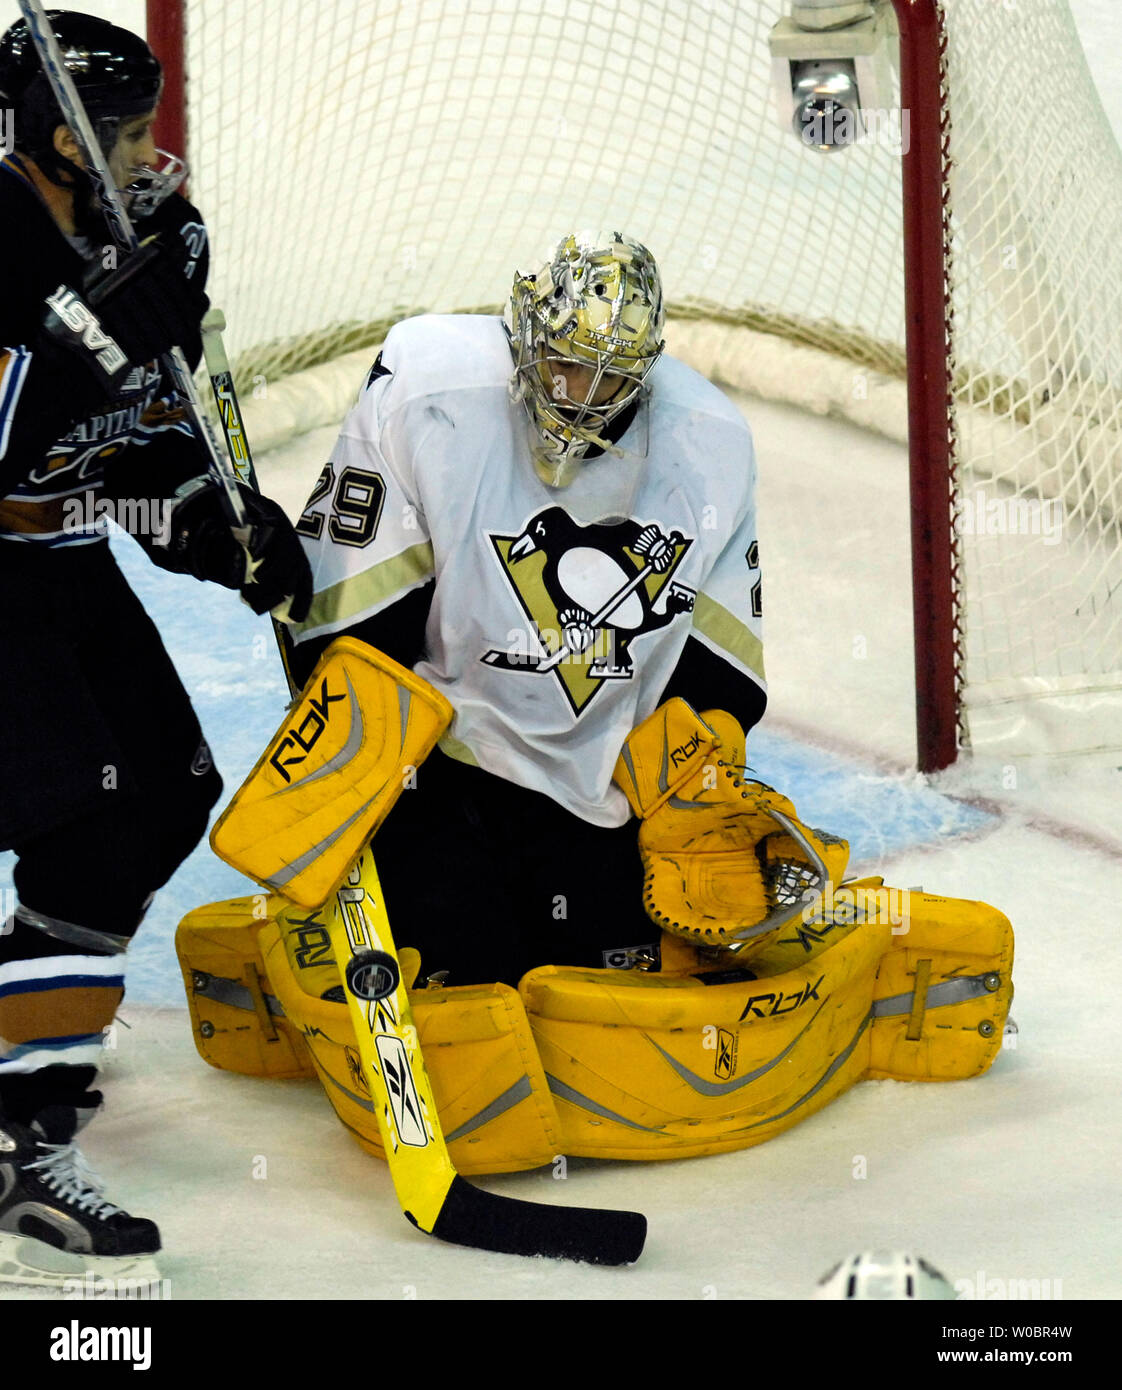 Allen: Penguins must return Marc-Andre Fleury to net for Game 6